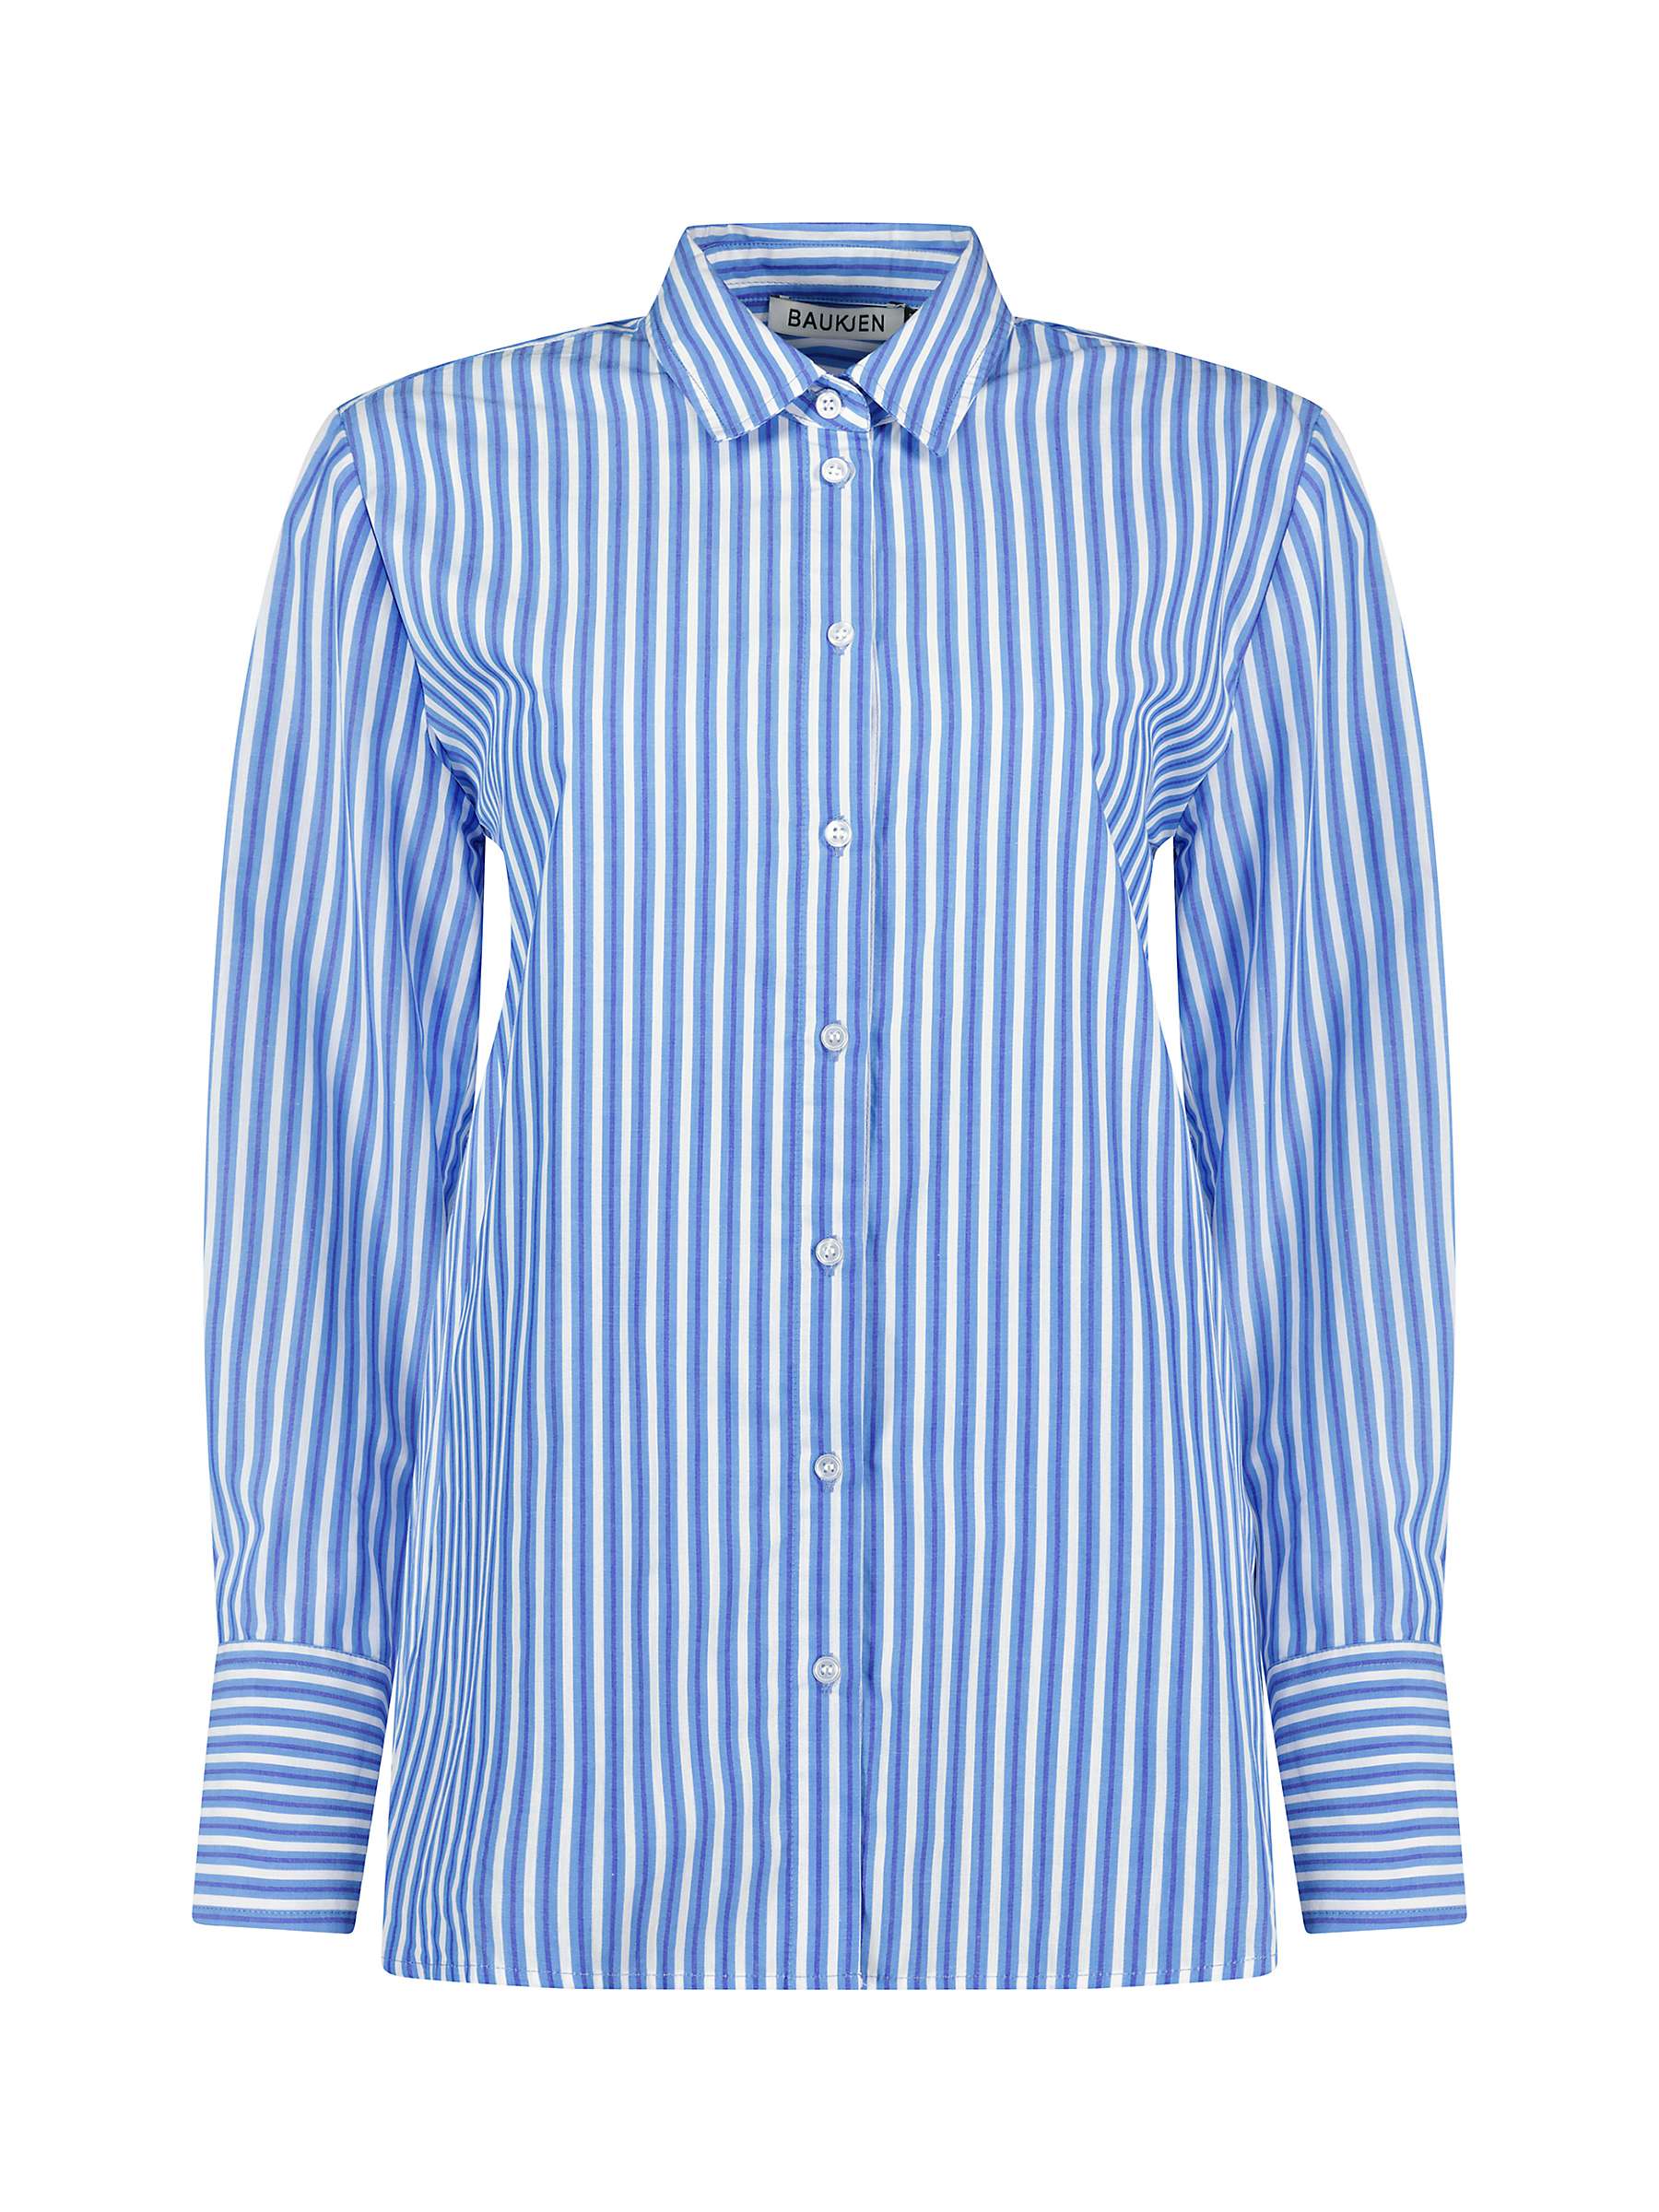 Buy Baukjen Rishma Organic Cotton Stripe Shirt, Blue/Soft White Online at johnlewis.com